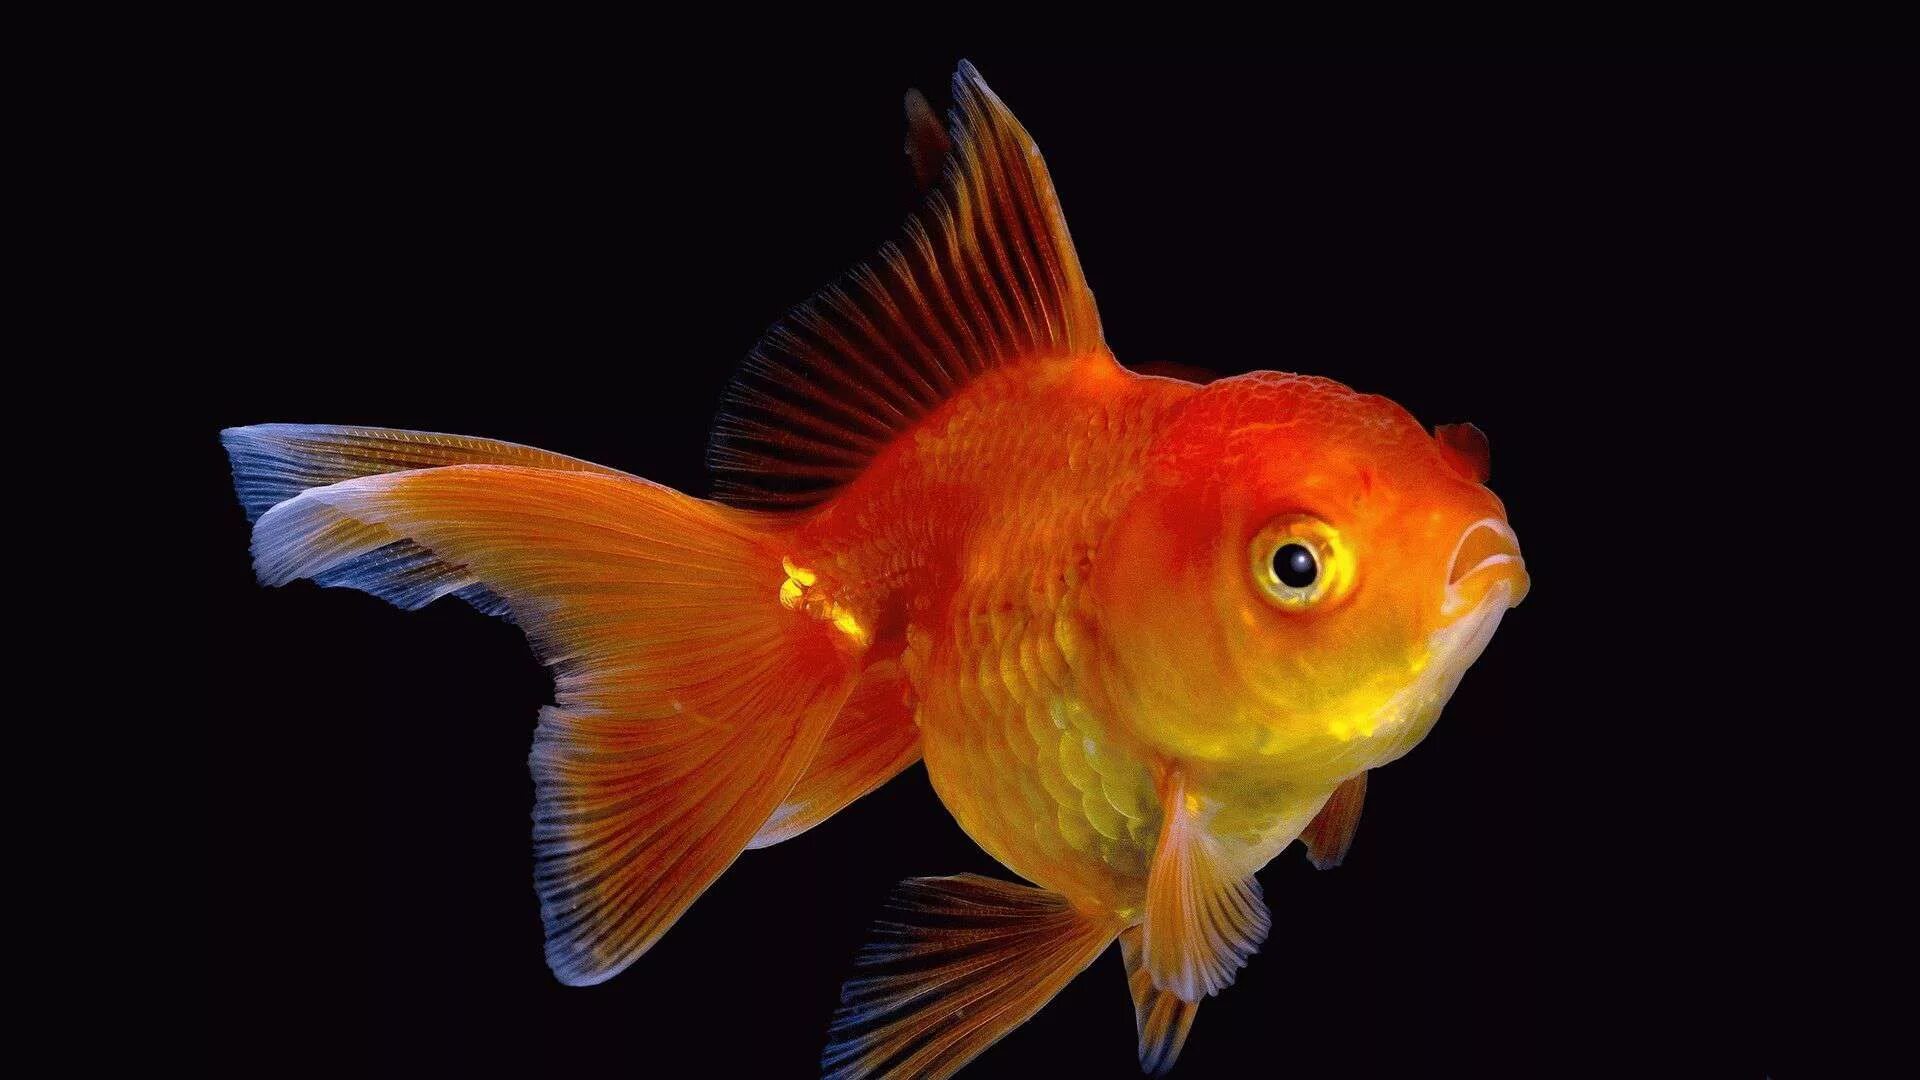 Аквариумная рыбка 6 сканворд. Вуалехвост рыбка. Аквариумные рыбки Золотая рыбка. Золотая рыбка Оранда красная. Carassius auratus Золотая рыбка.